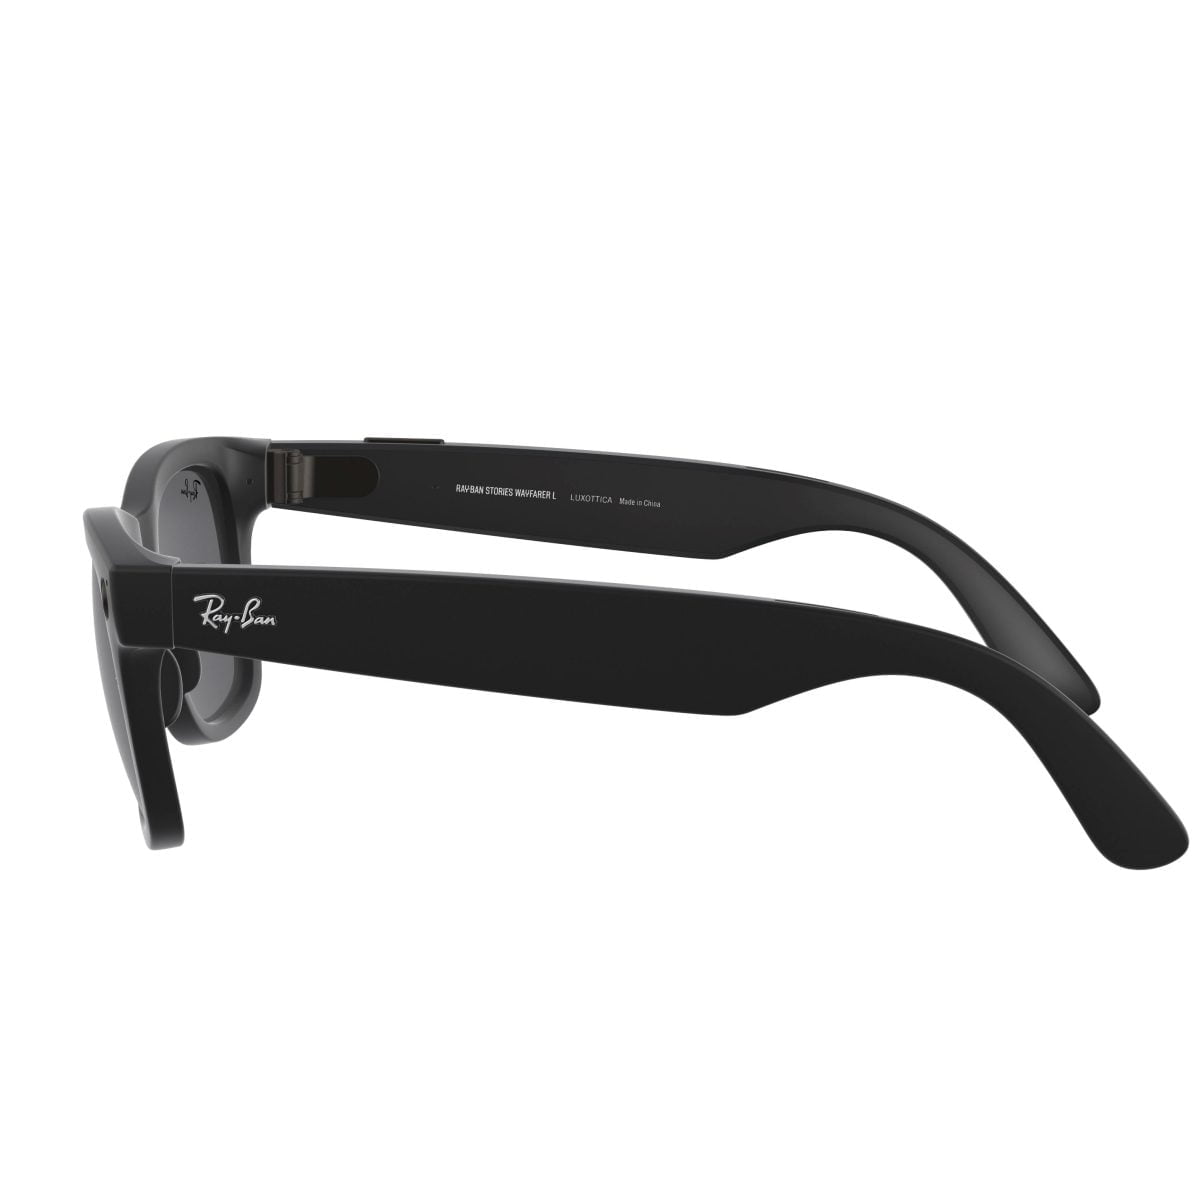 Ray Ban Stories Wayfarer Smart Glasses 53Mm Matte Black/Dark Grey